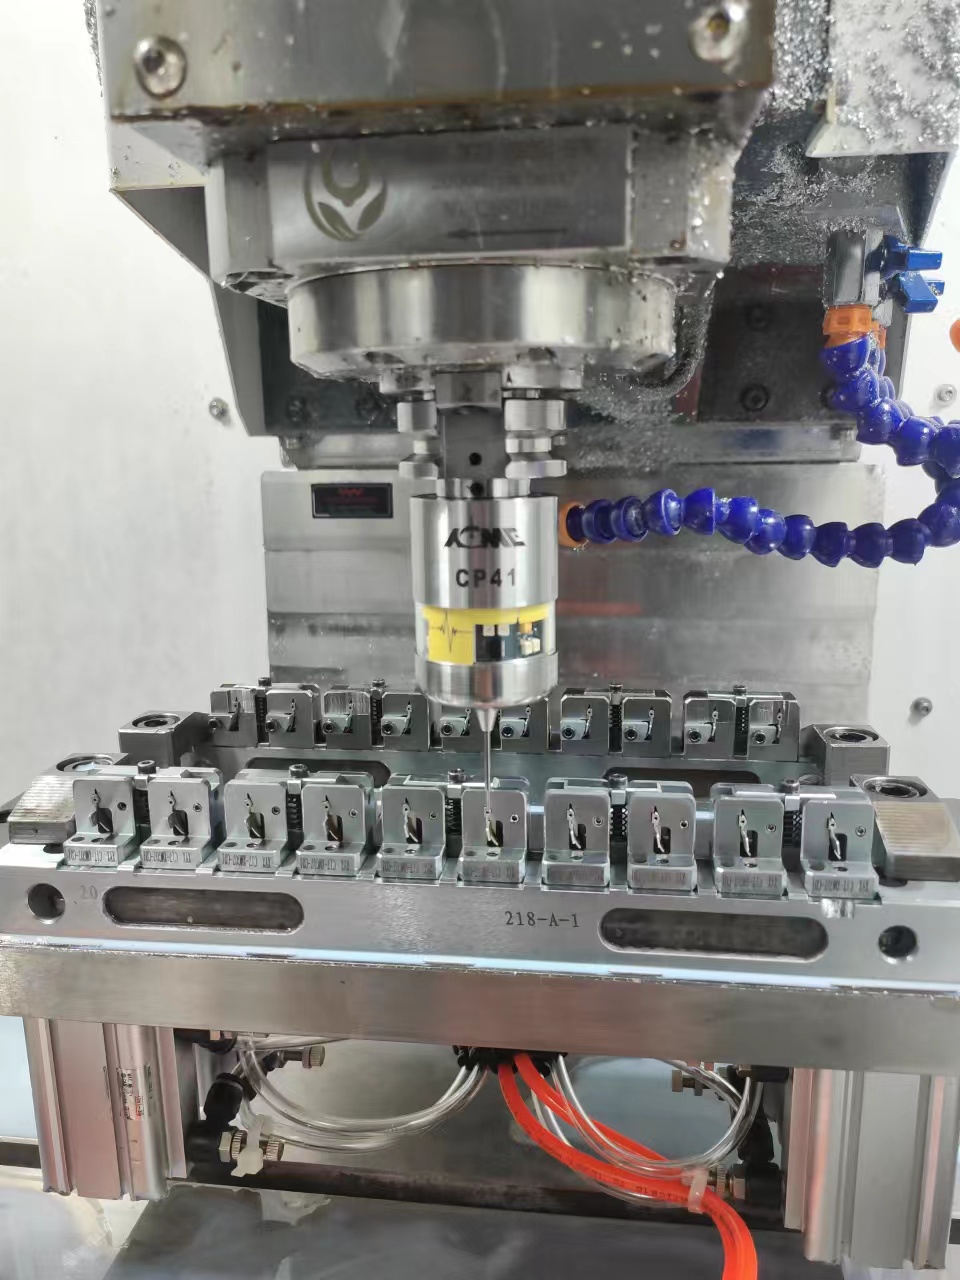 CNC center ultra-high precision machine tool na sumusukat sa CP41 (5)